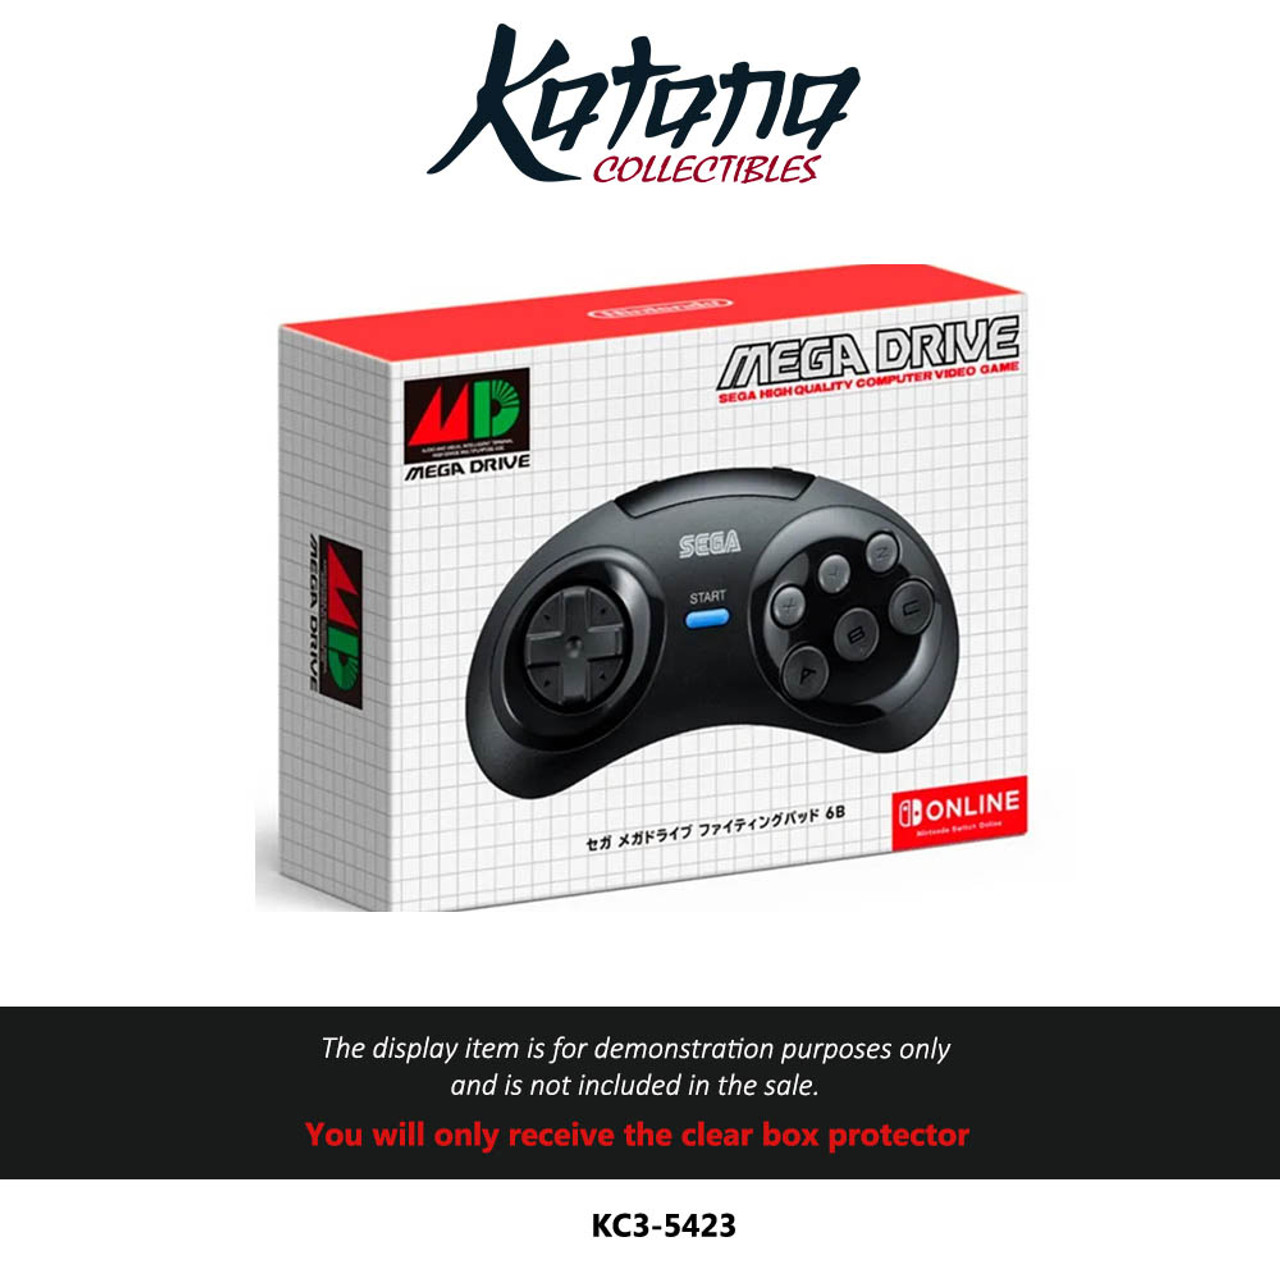 Katana Collectibles Protector For Nintendo Online Sega Mega Drive Fighting Pad 6B